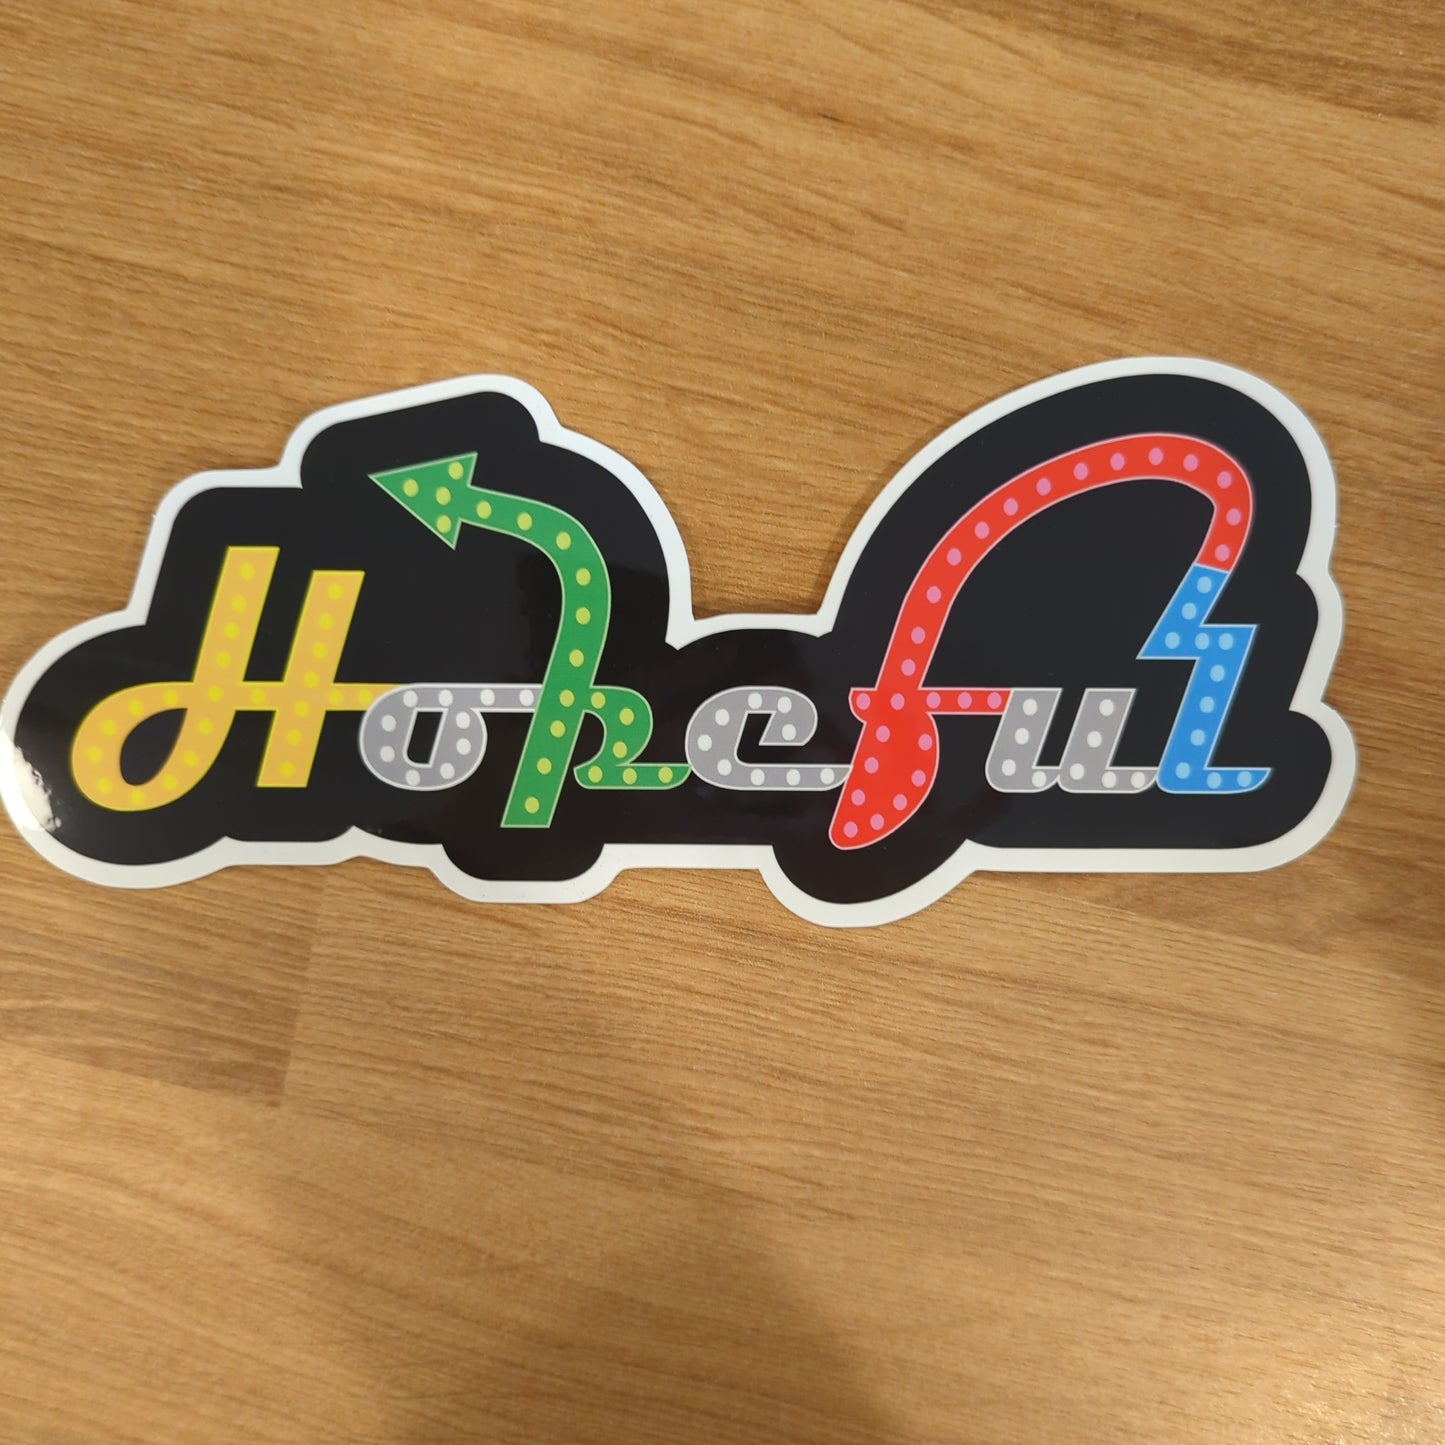 Hopeful stickers